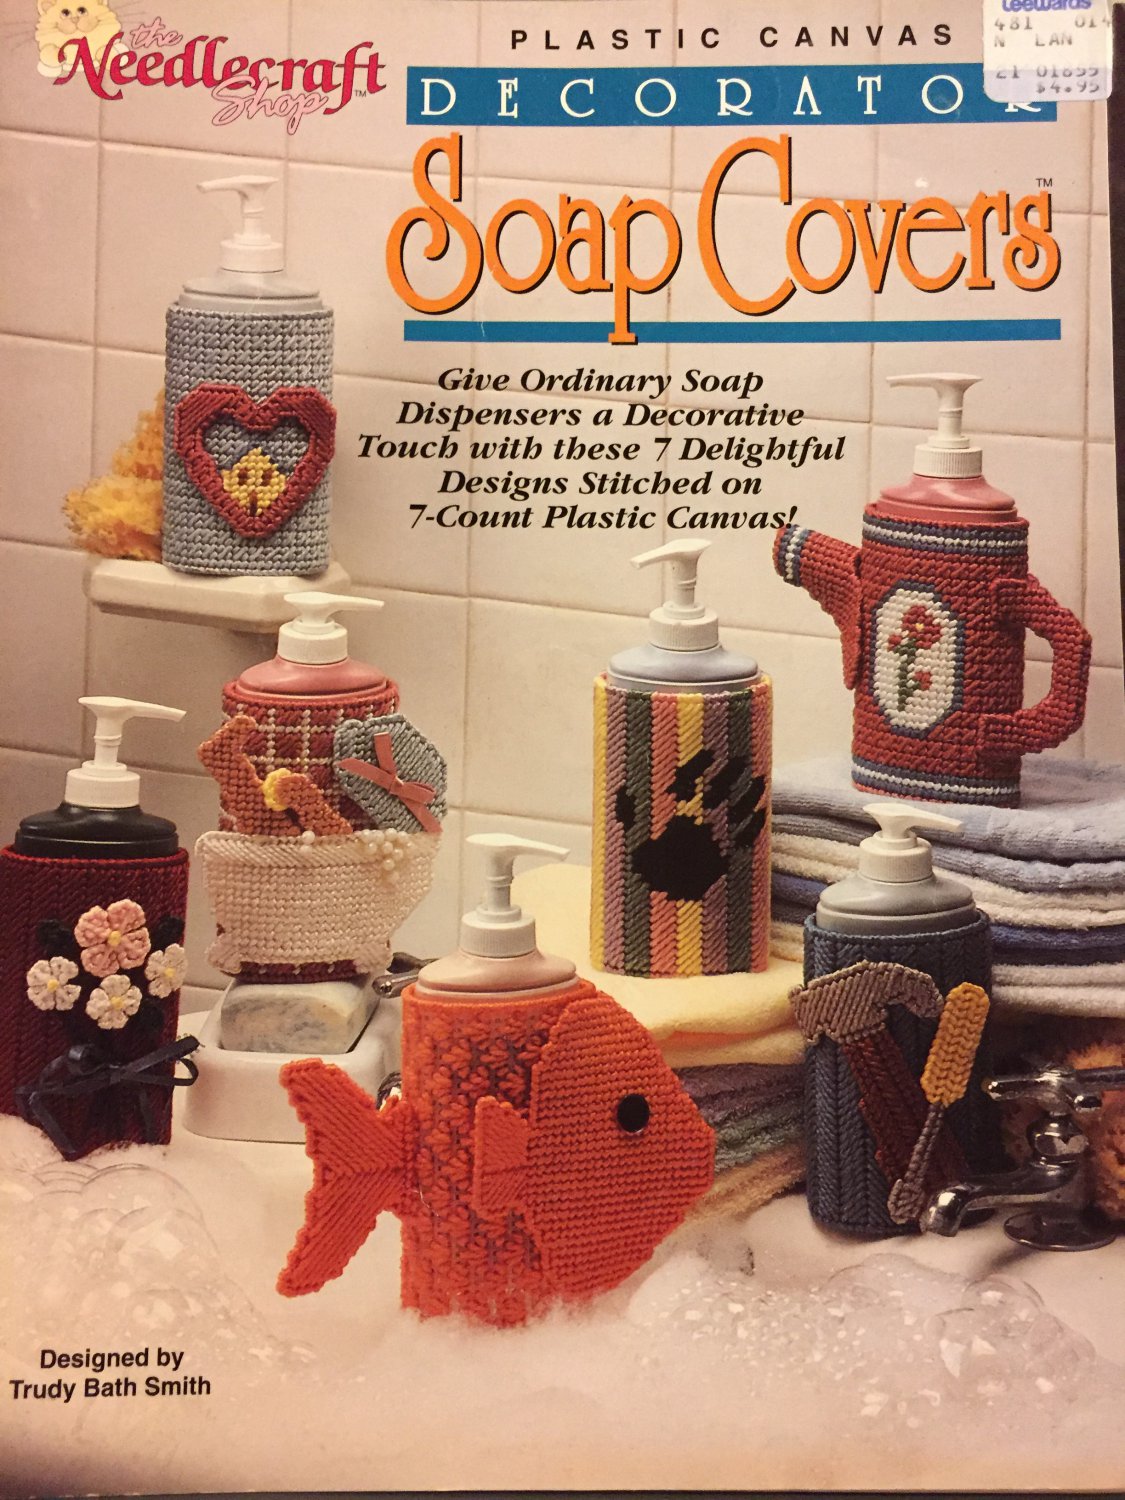 Decorative Soap Covers - the Needlecraft Shop Plastic Canvas Pattern 923343